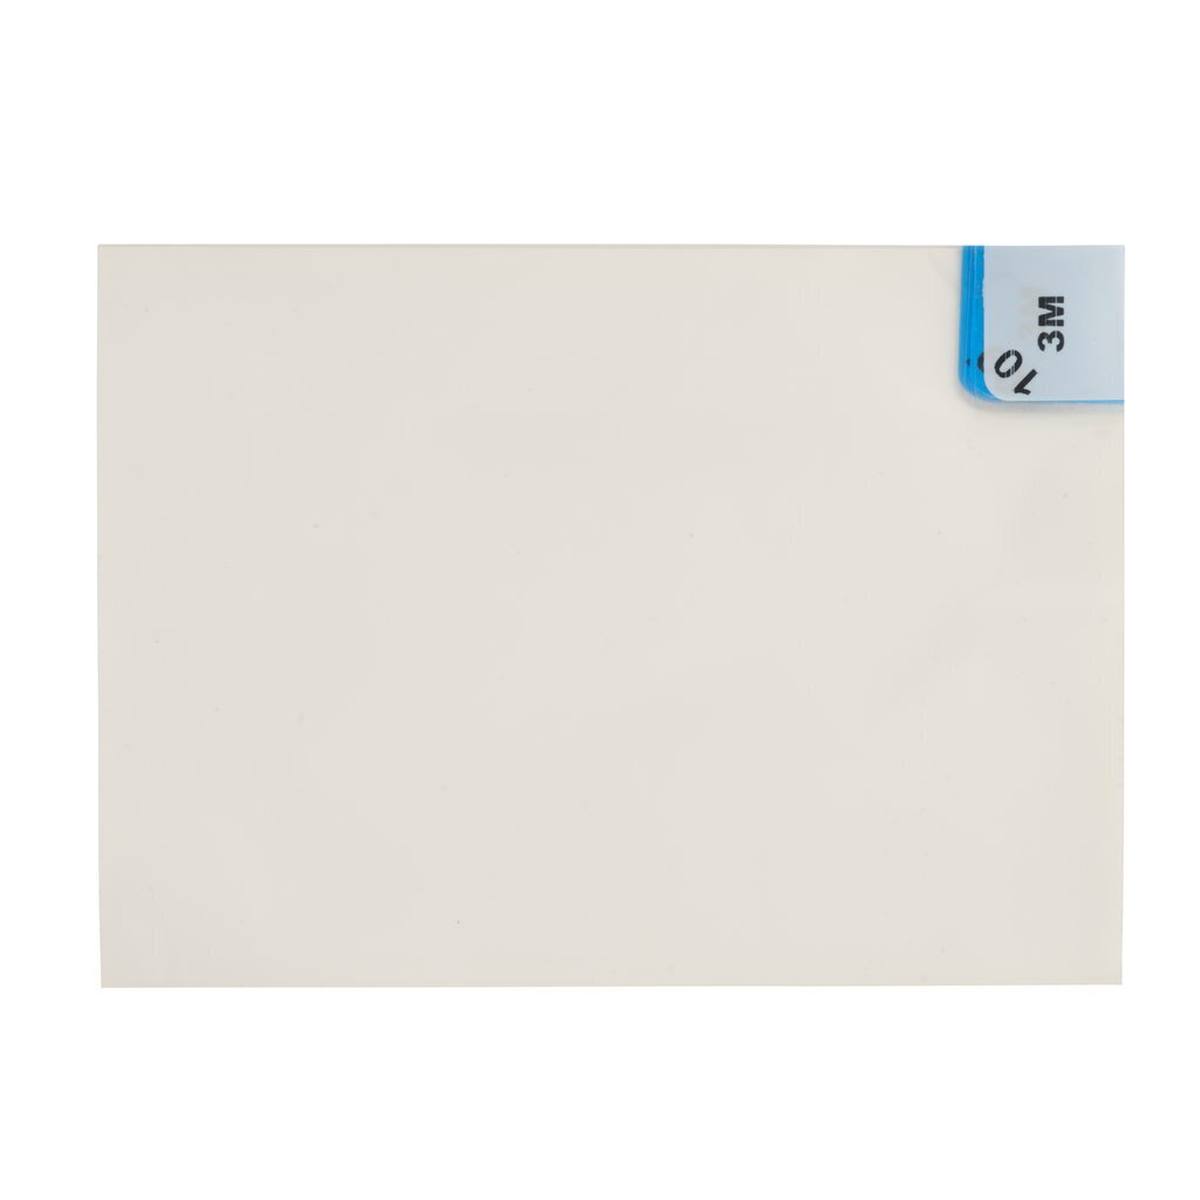 3M 4300 Nomad Tappetino adesivo per polveri sottili, bianco, 0,9m x 0,45m, 40pz strati di polietilene trasparente